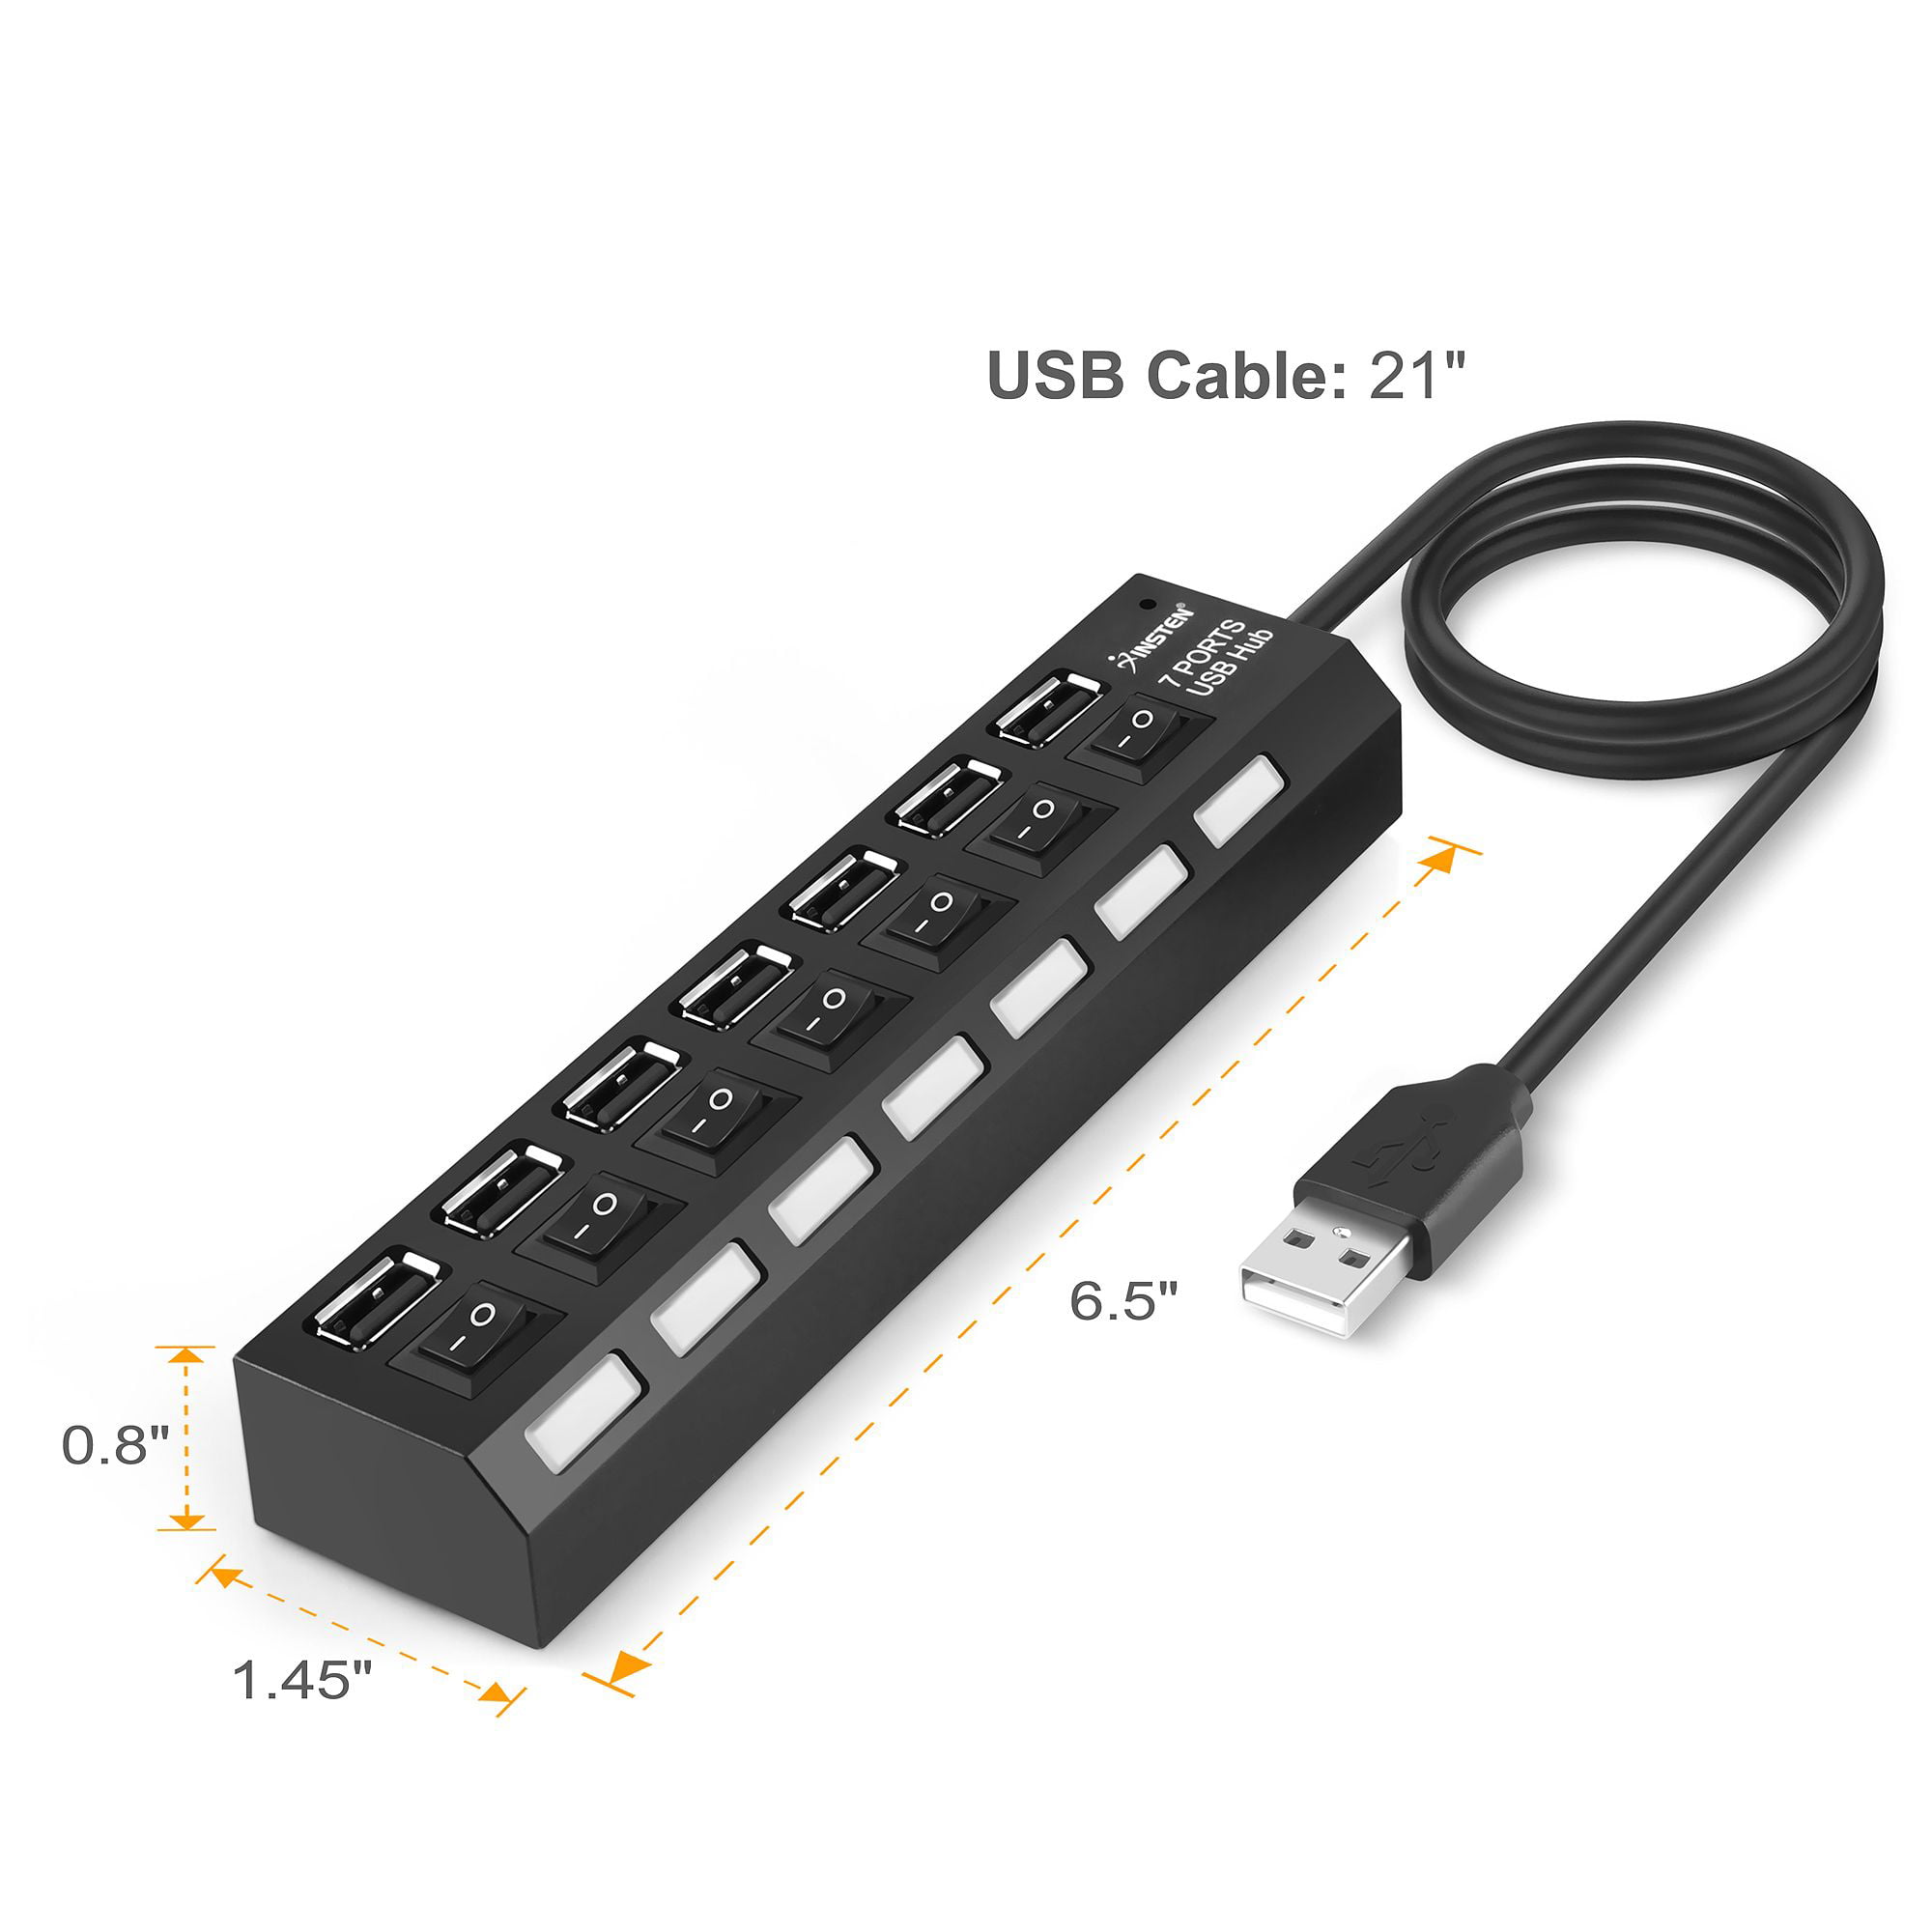 USB Hub 2.0 High Speed 4 Port USB 2.0 Hub Splitter On/Off Switch for Laptop PHWC 